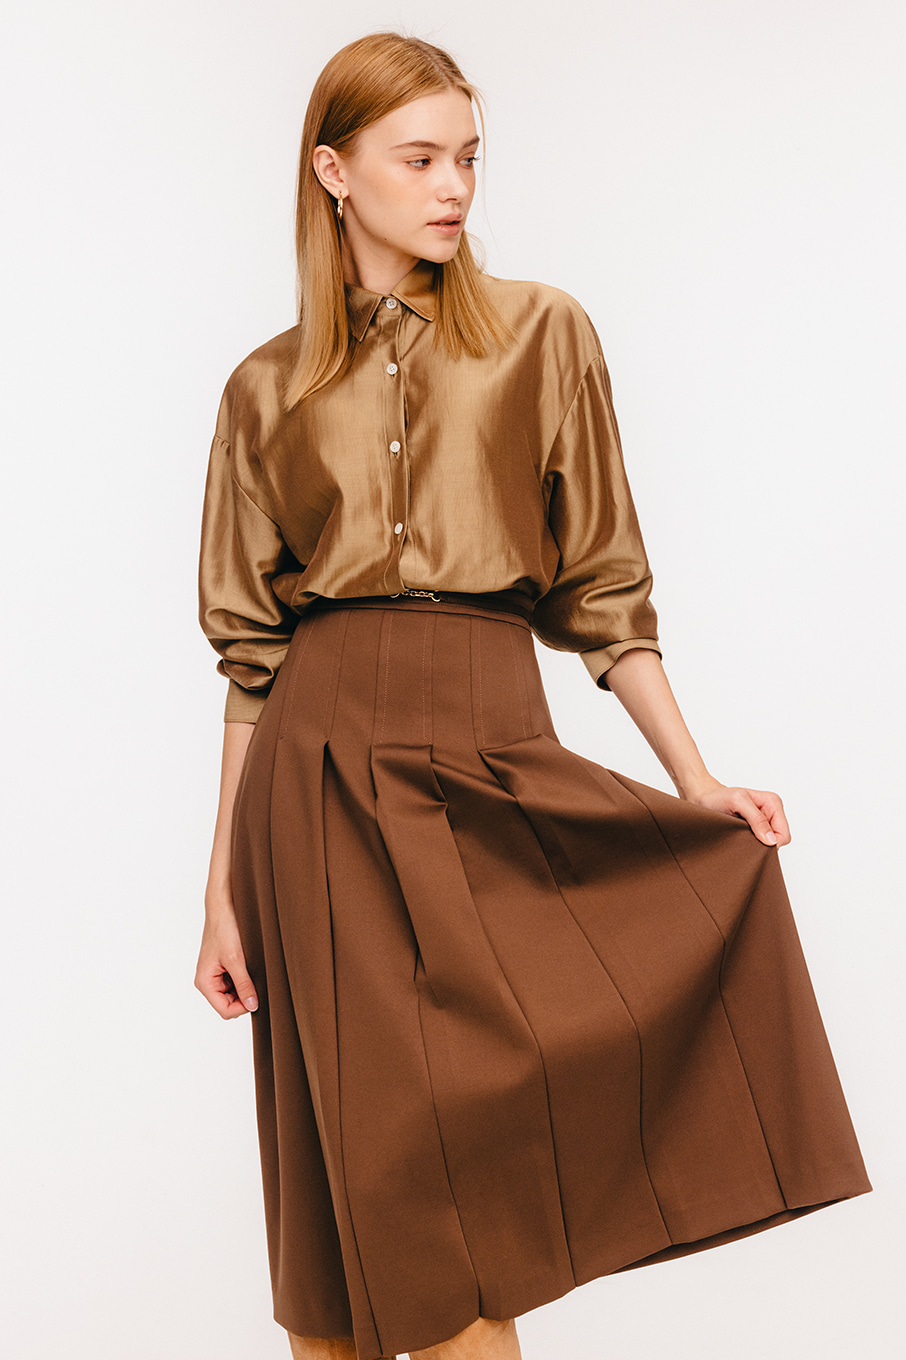 Mocri skirt (brown) 2차 리오더 예정